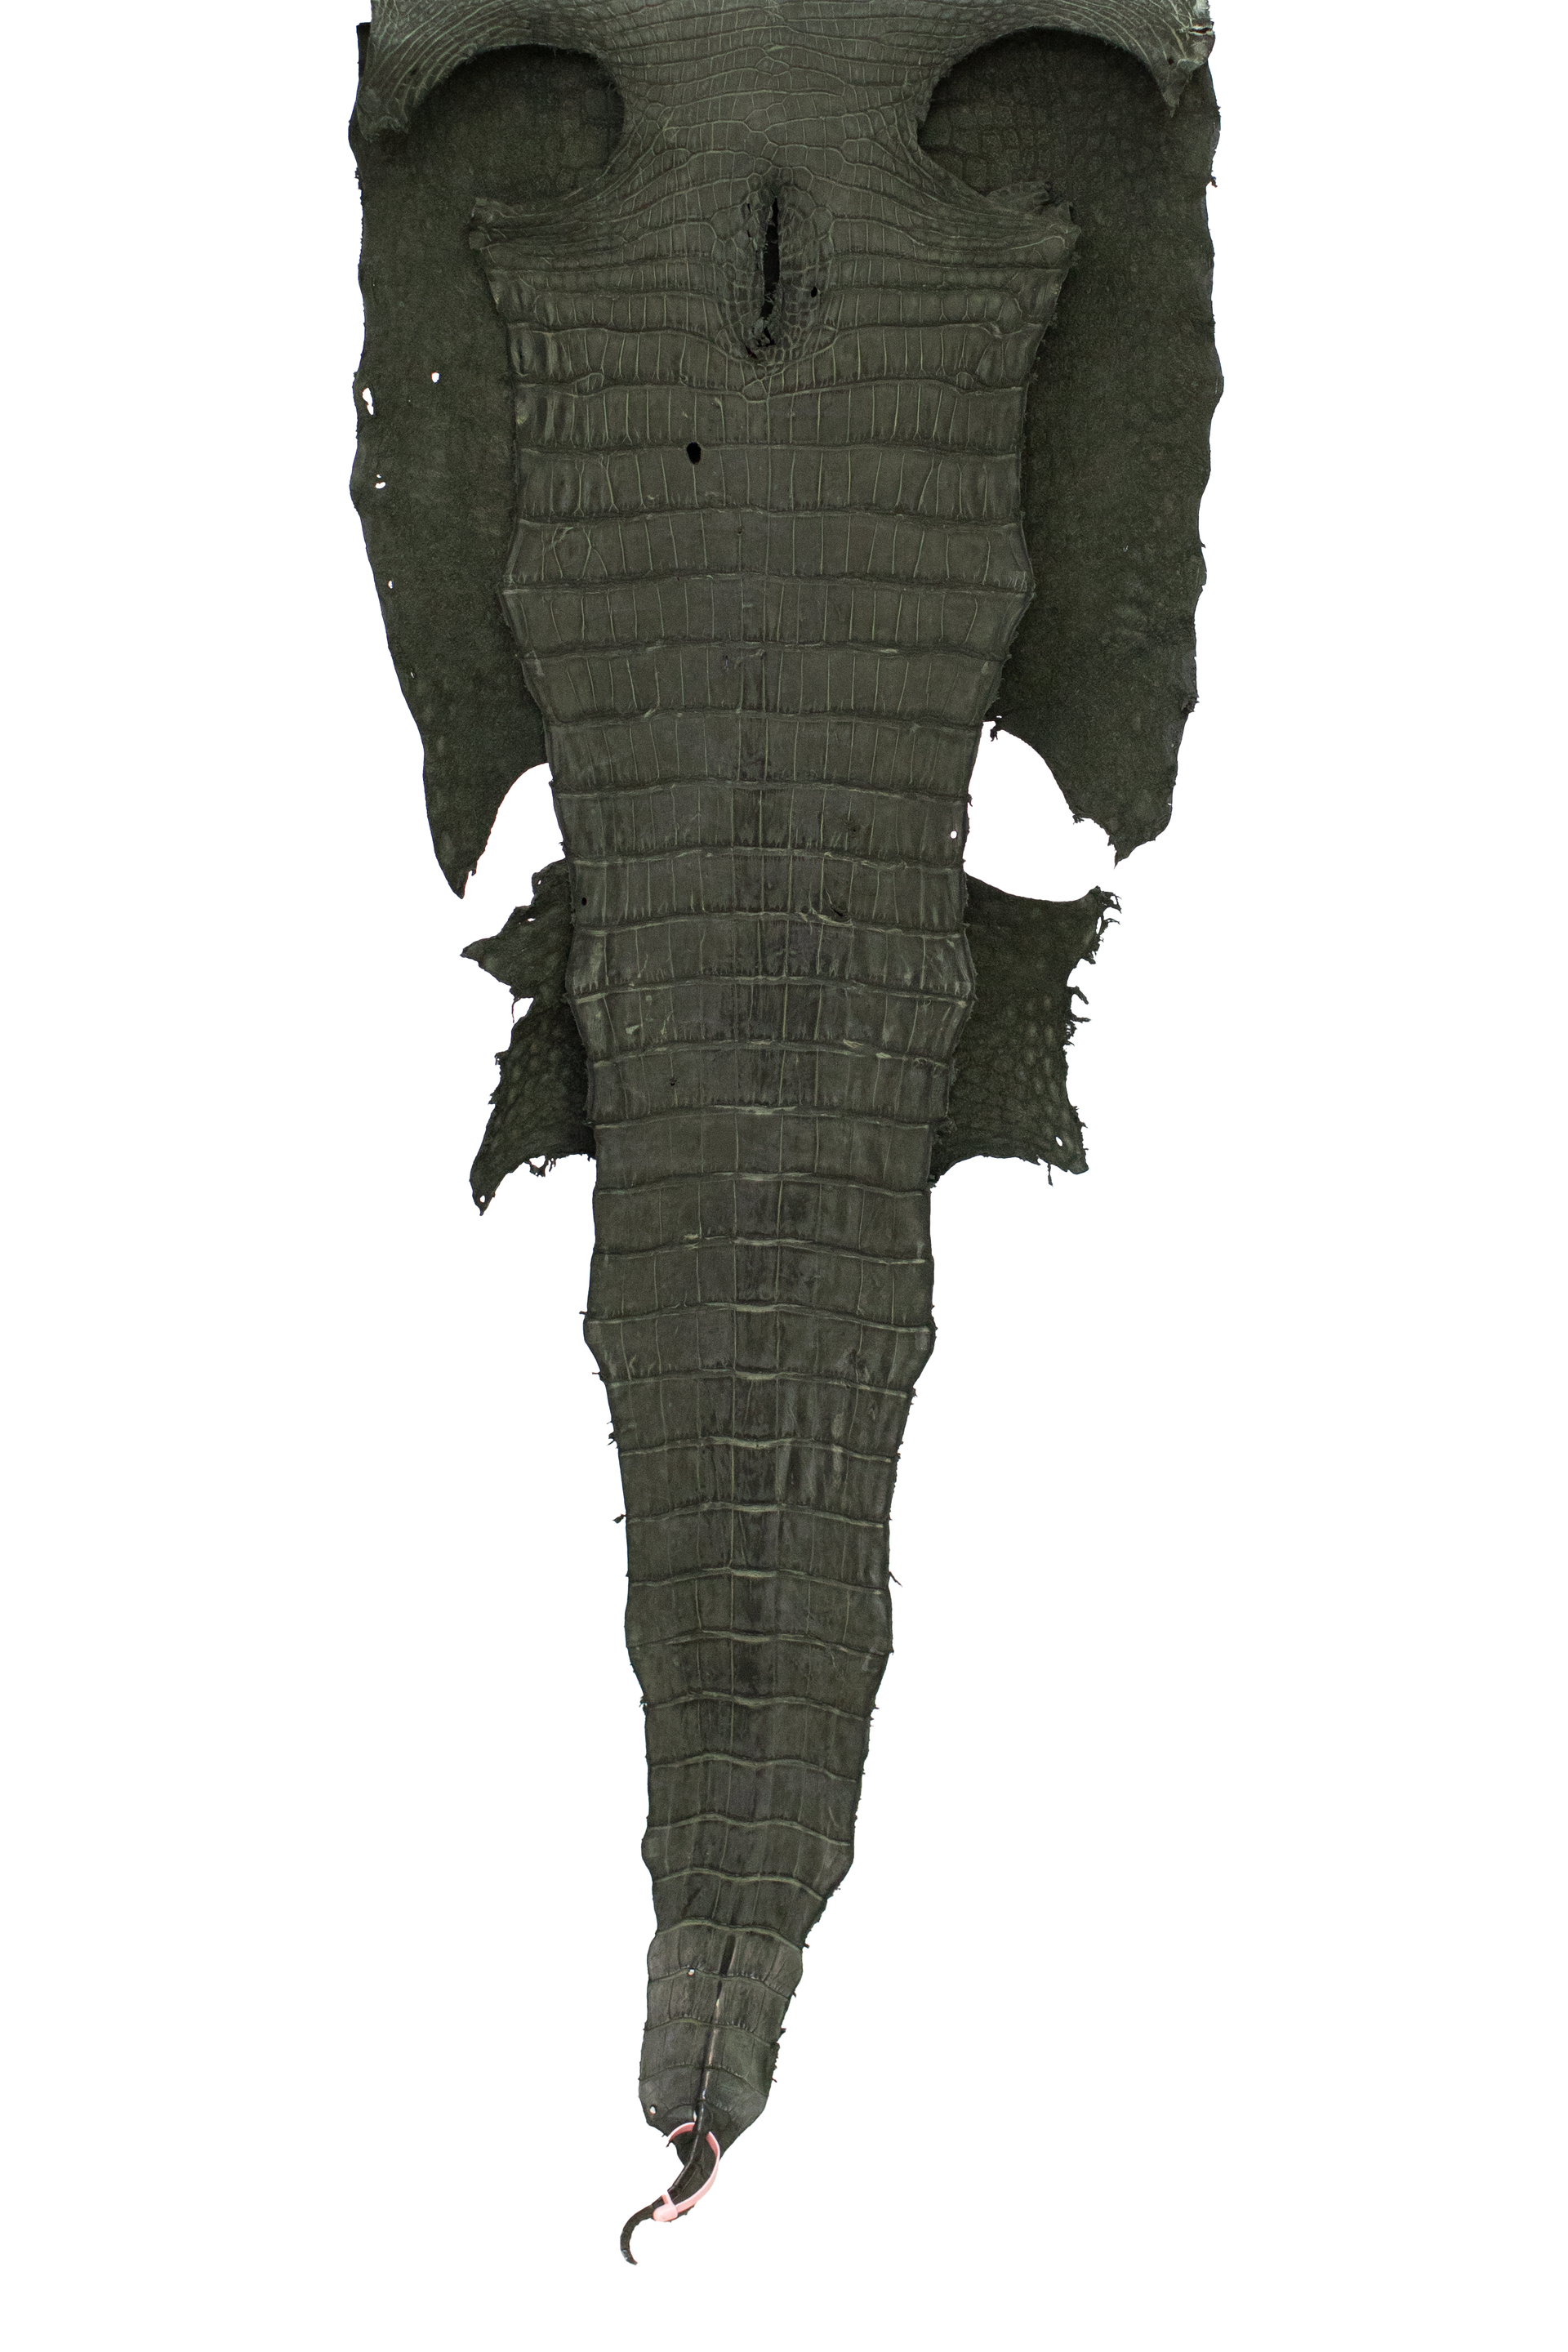 63 cm Grade 3/4 Olive Green Nubuck Wild American Alligator Leather - Tag: FL21-0086433